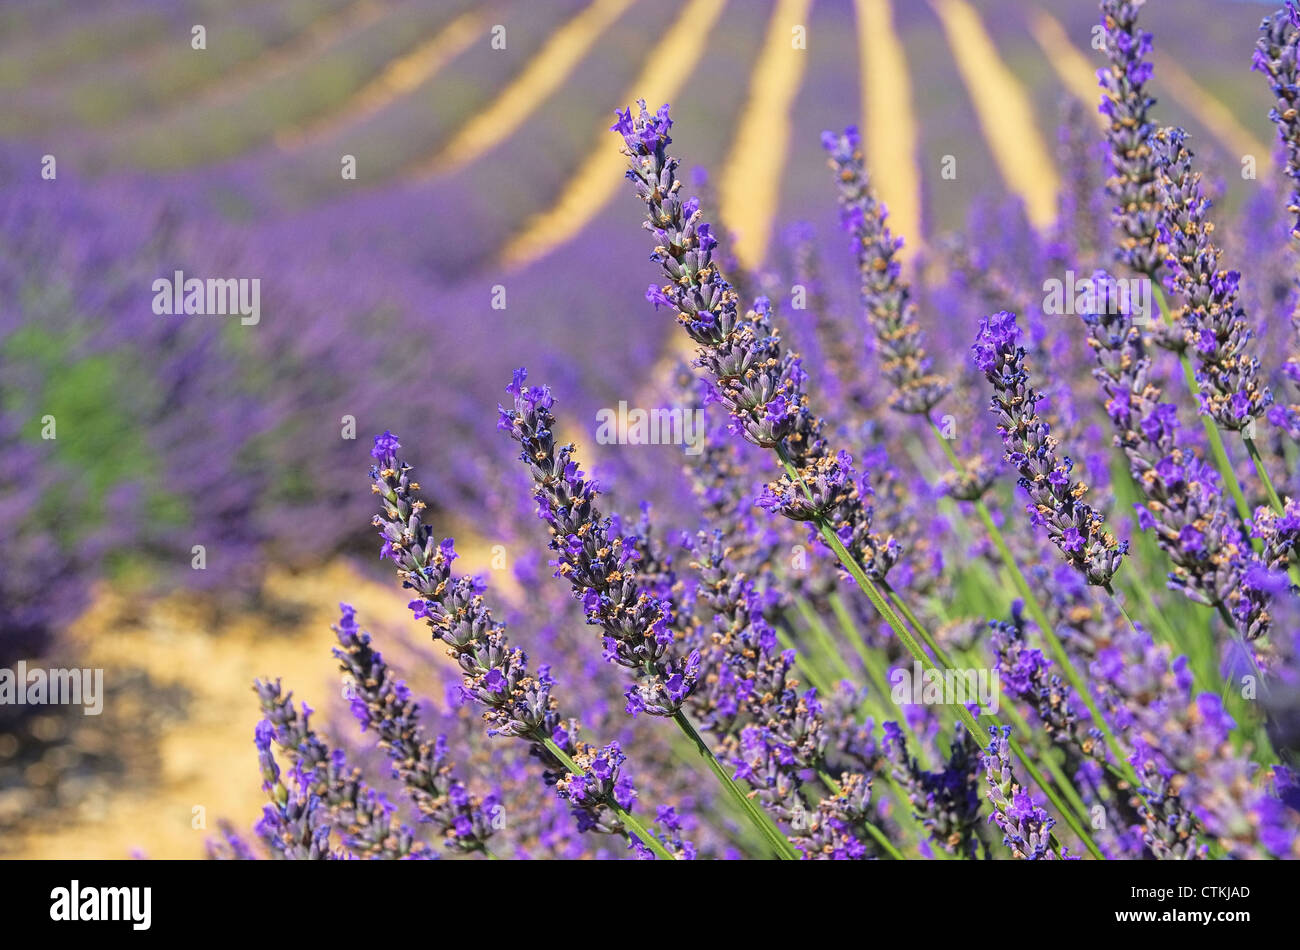 Lavendelfeld - lavender field 03 Stock Photo